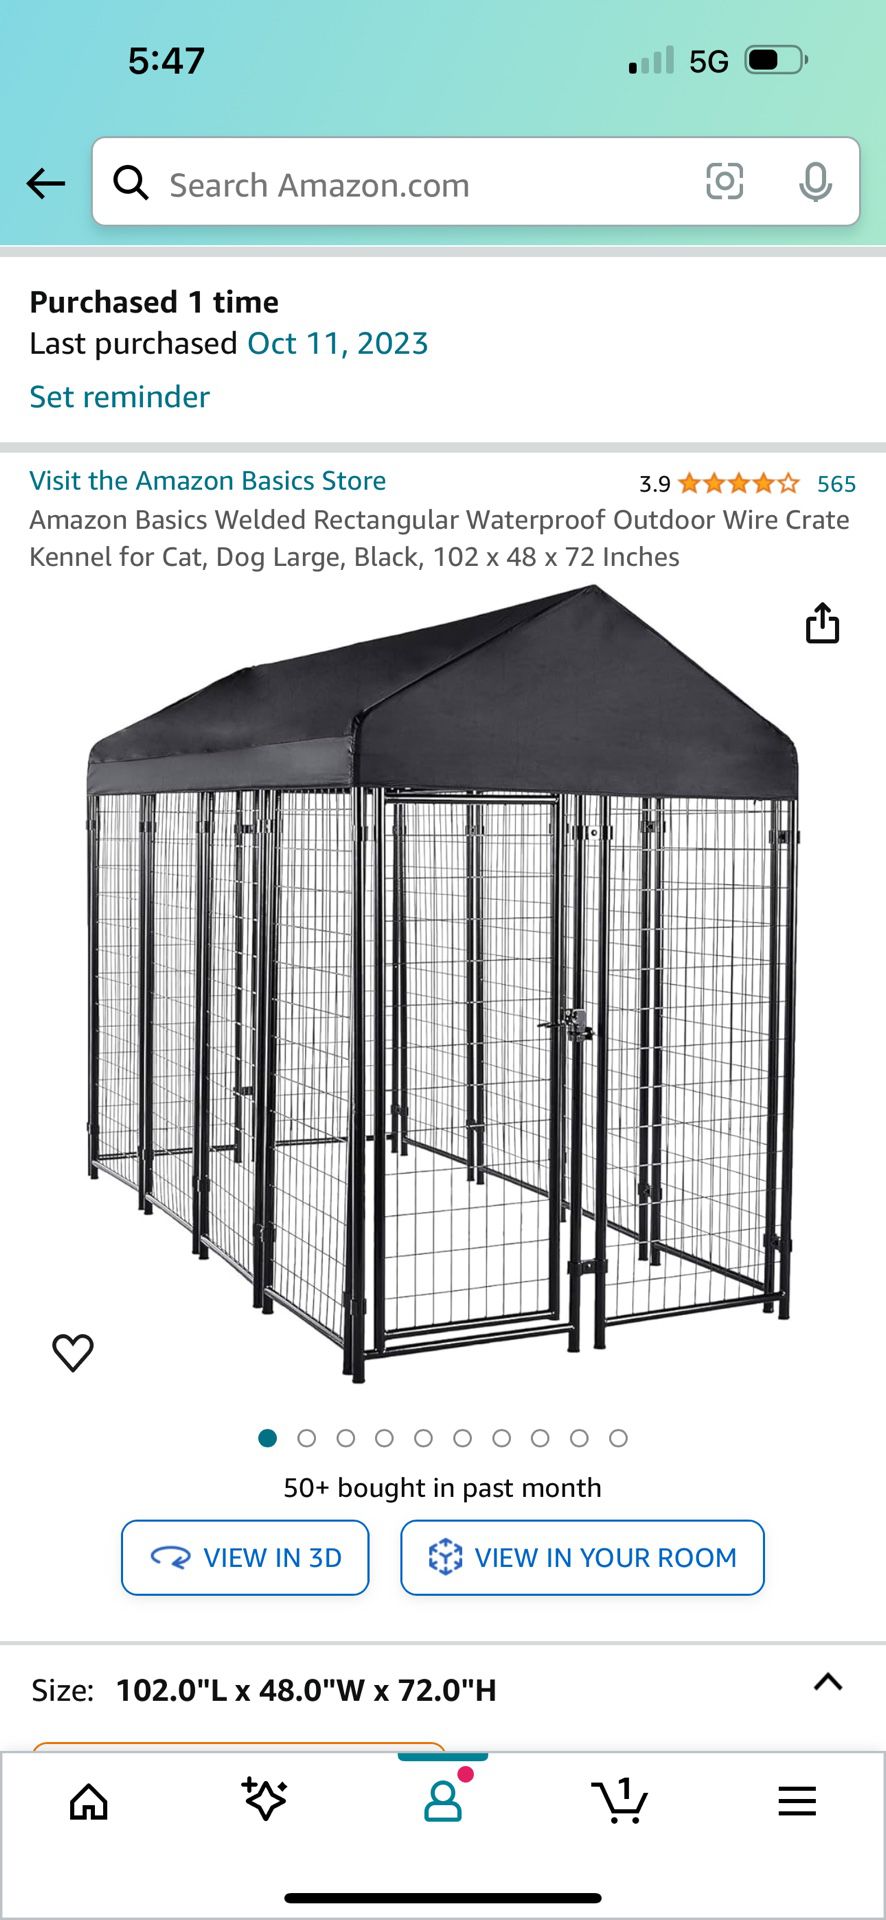 Dog Cage/Kennel